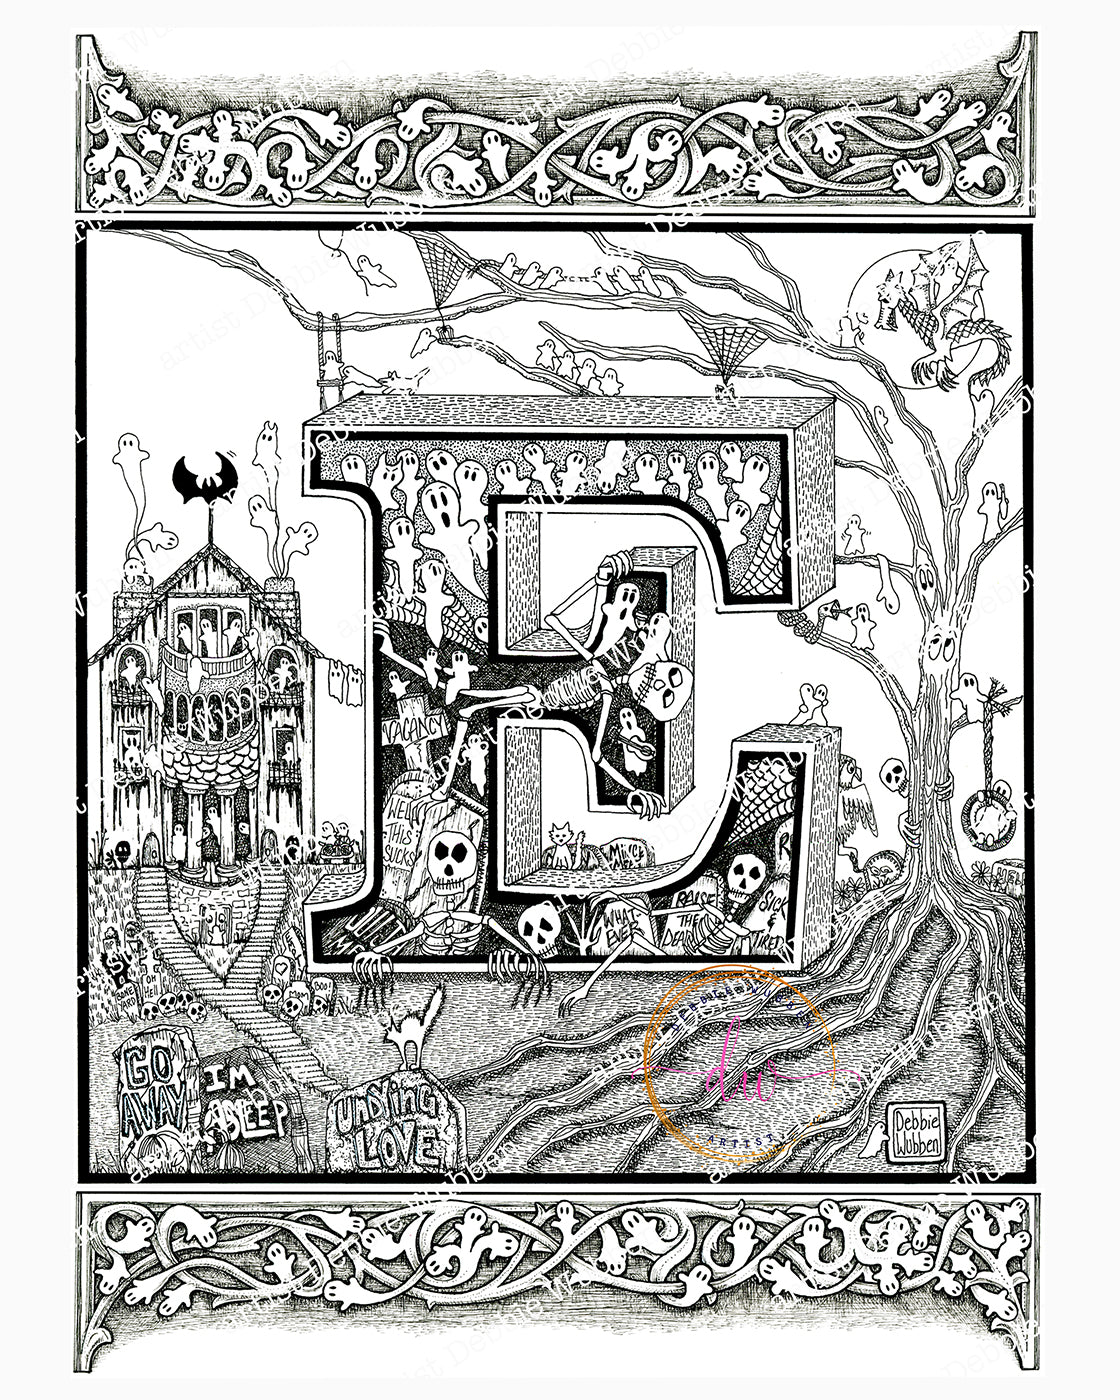 A Haunted Alphabet - Letter "E"